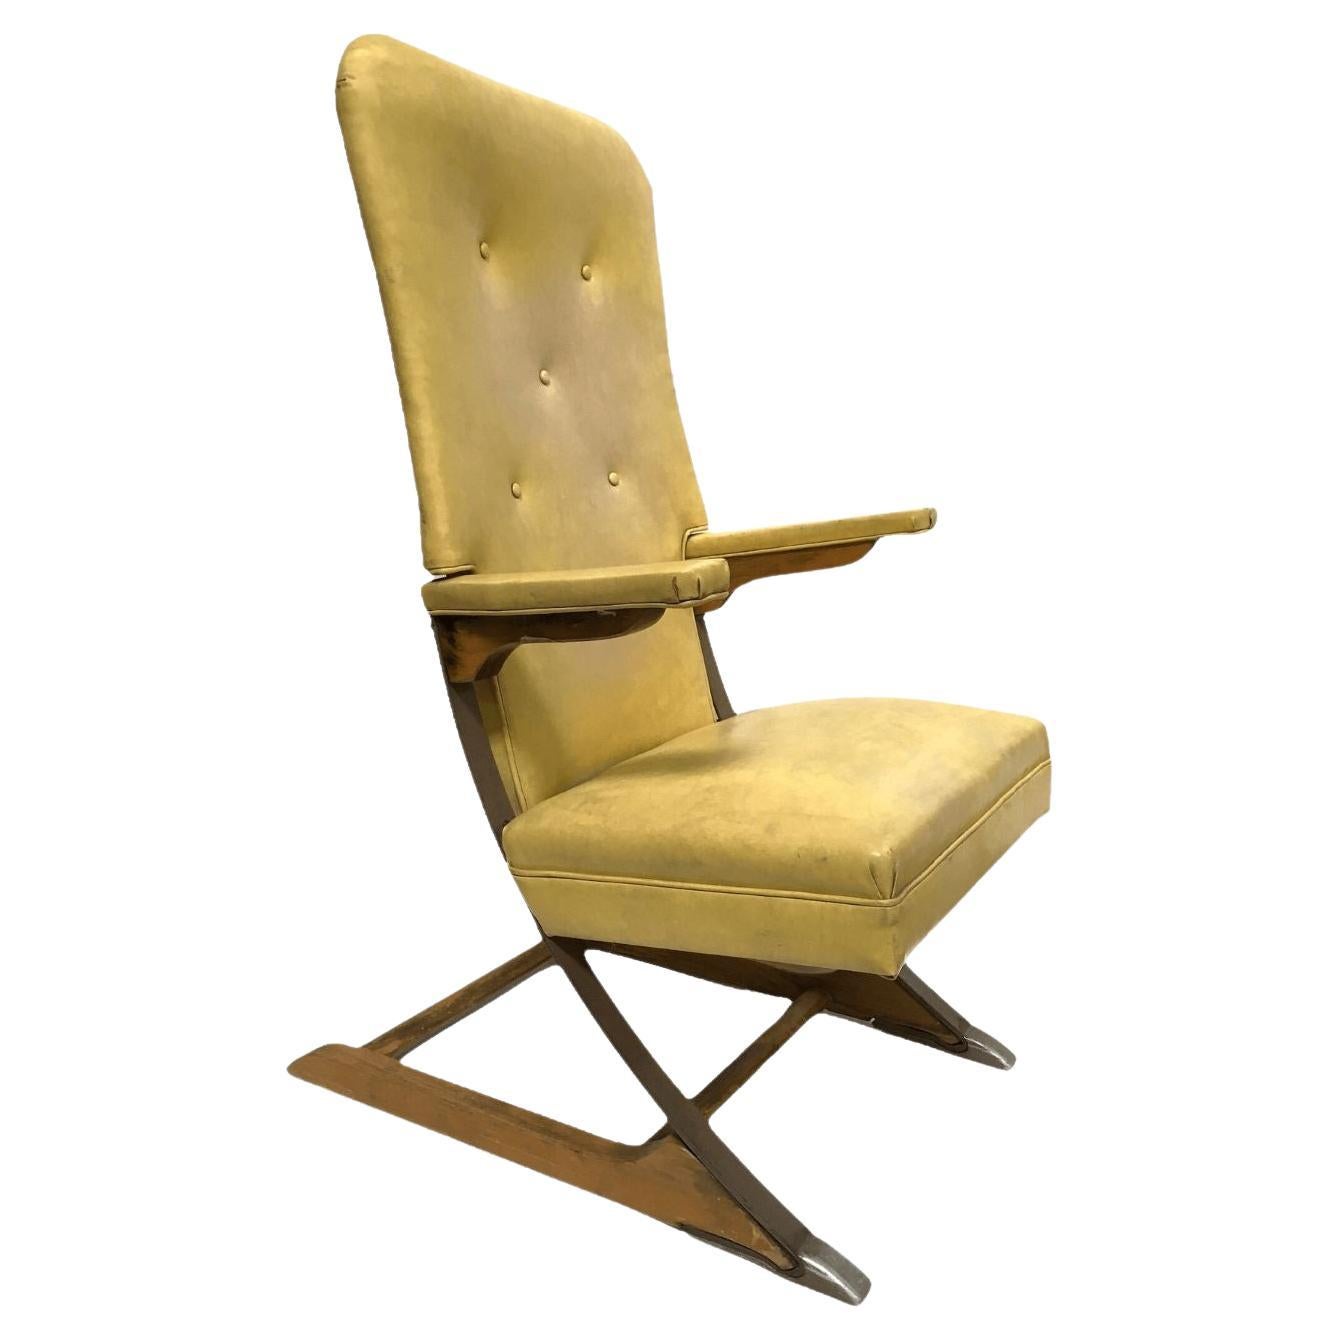 Vintage Rock-a-Chair Cantilever Rocker Chair in Harvest Gold Vinyl